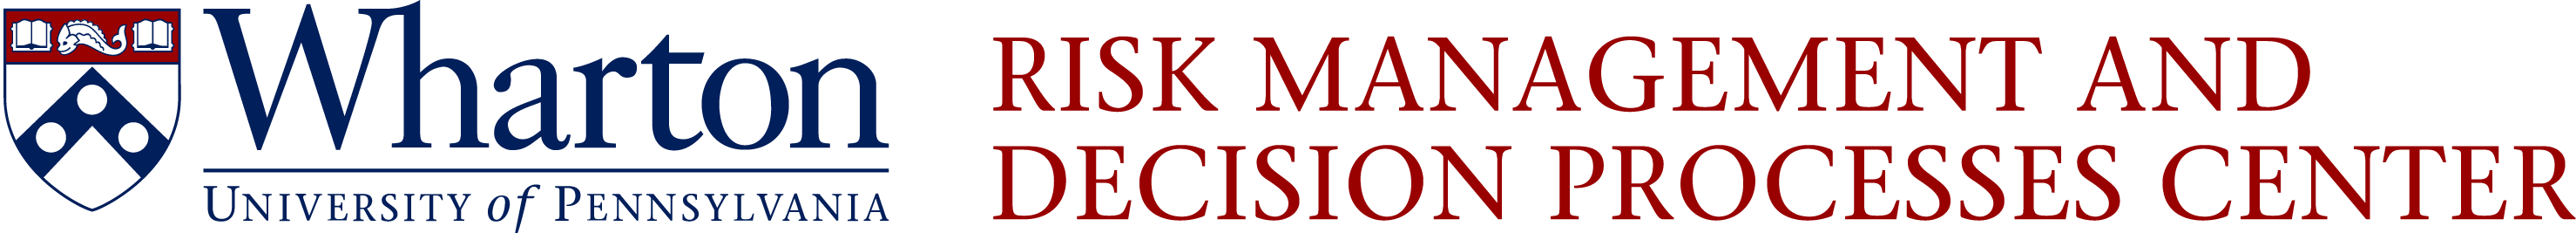 Wharton Risk Management and Decision Process Center